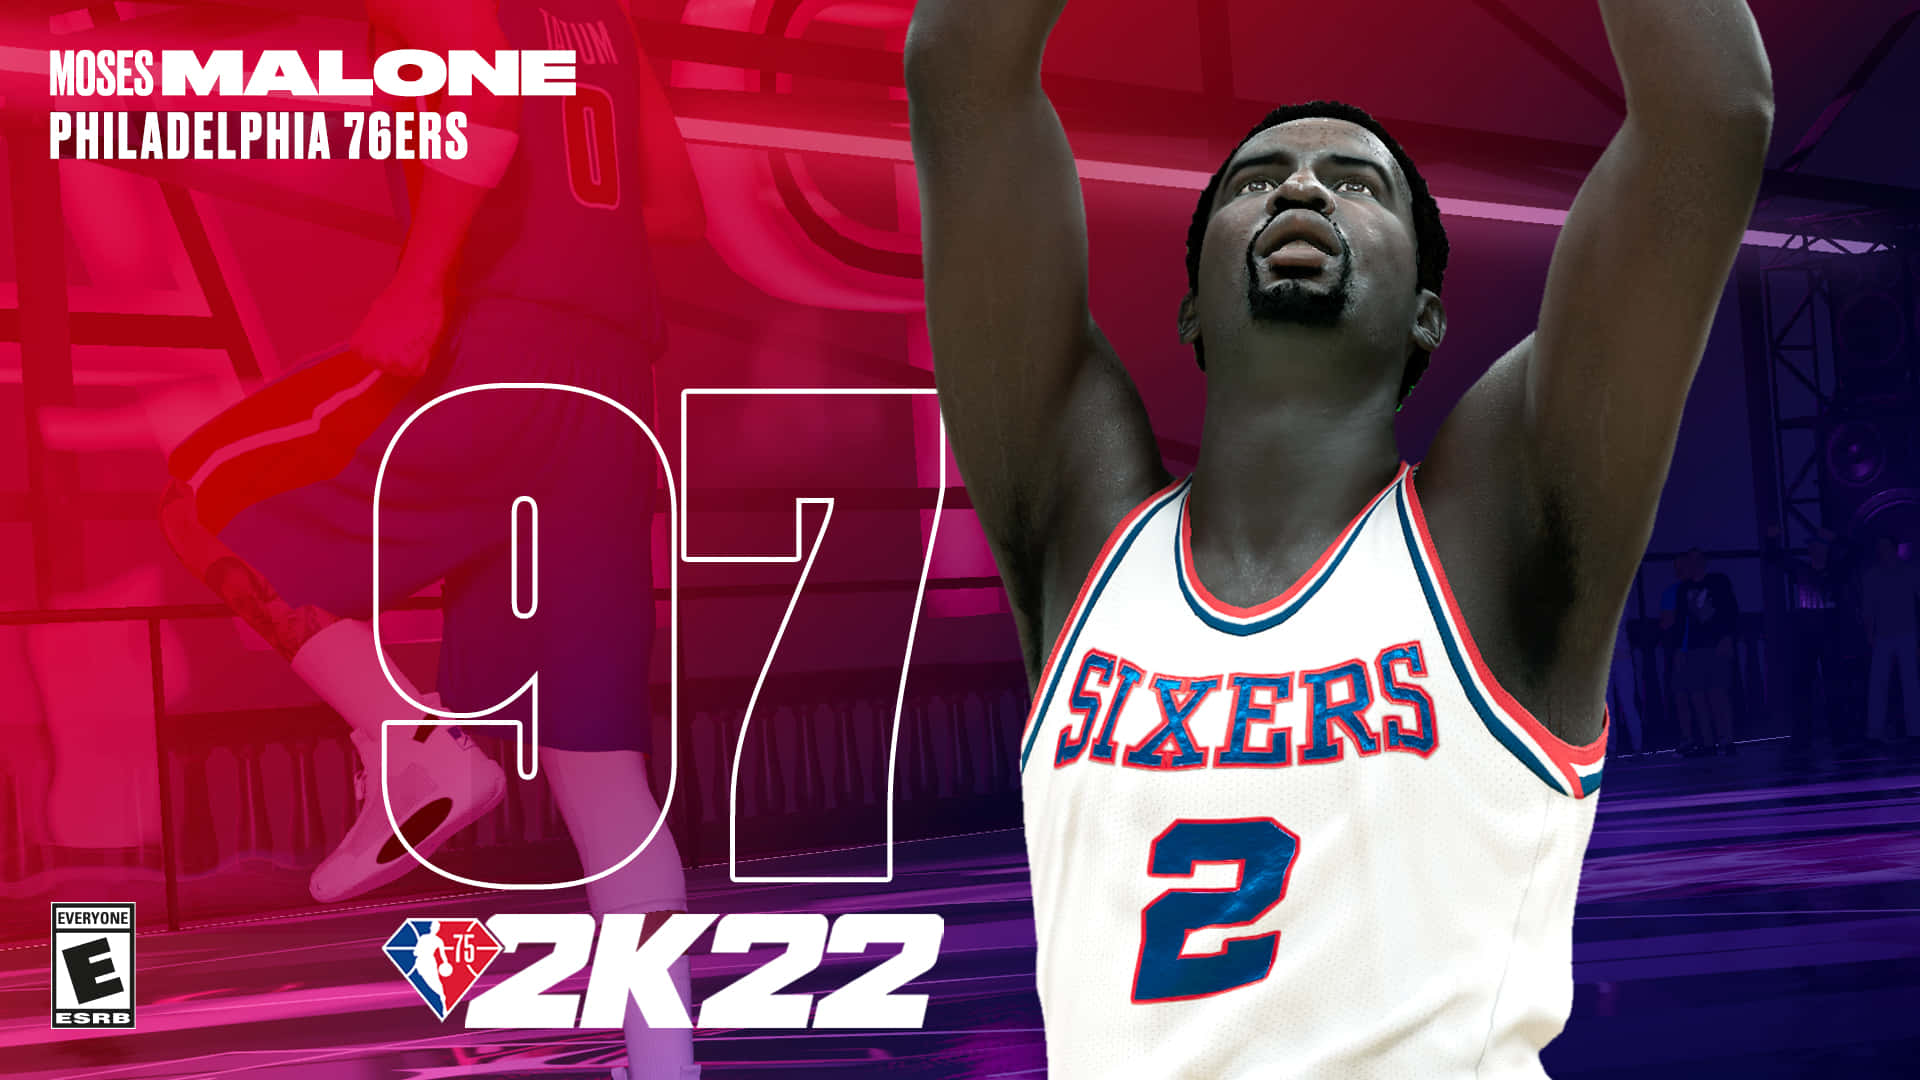 Mosesmalone 2022 Basketball-spiel Wallpaper